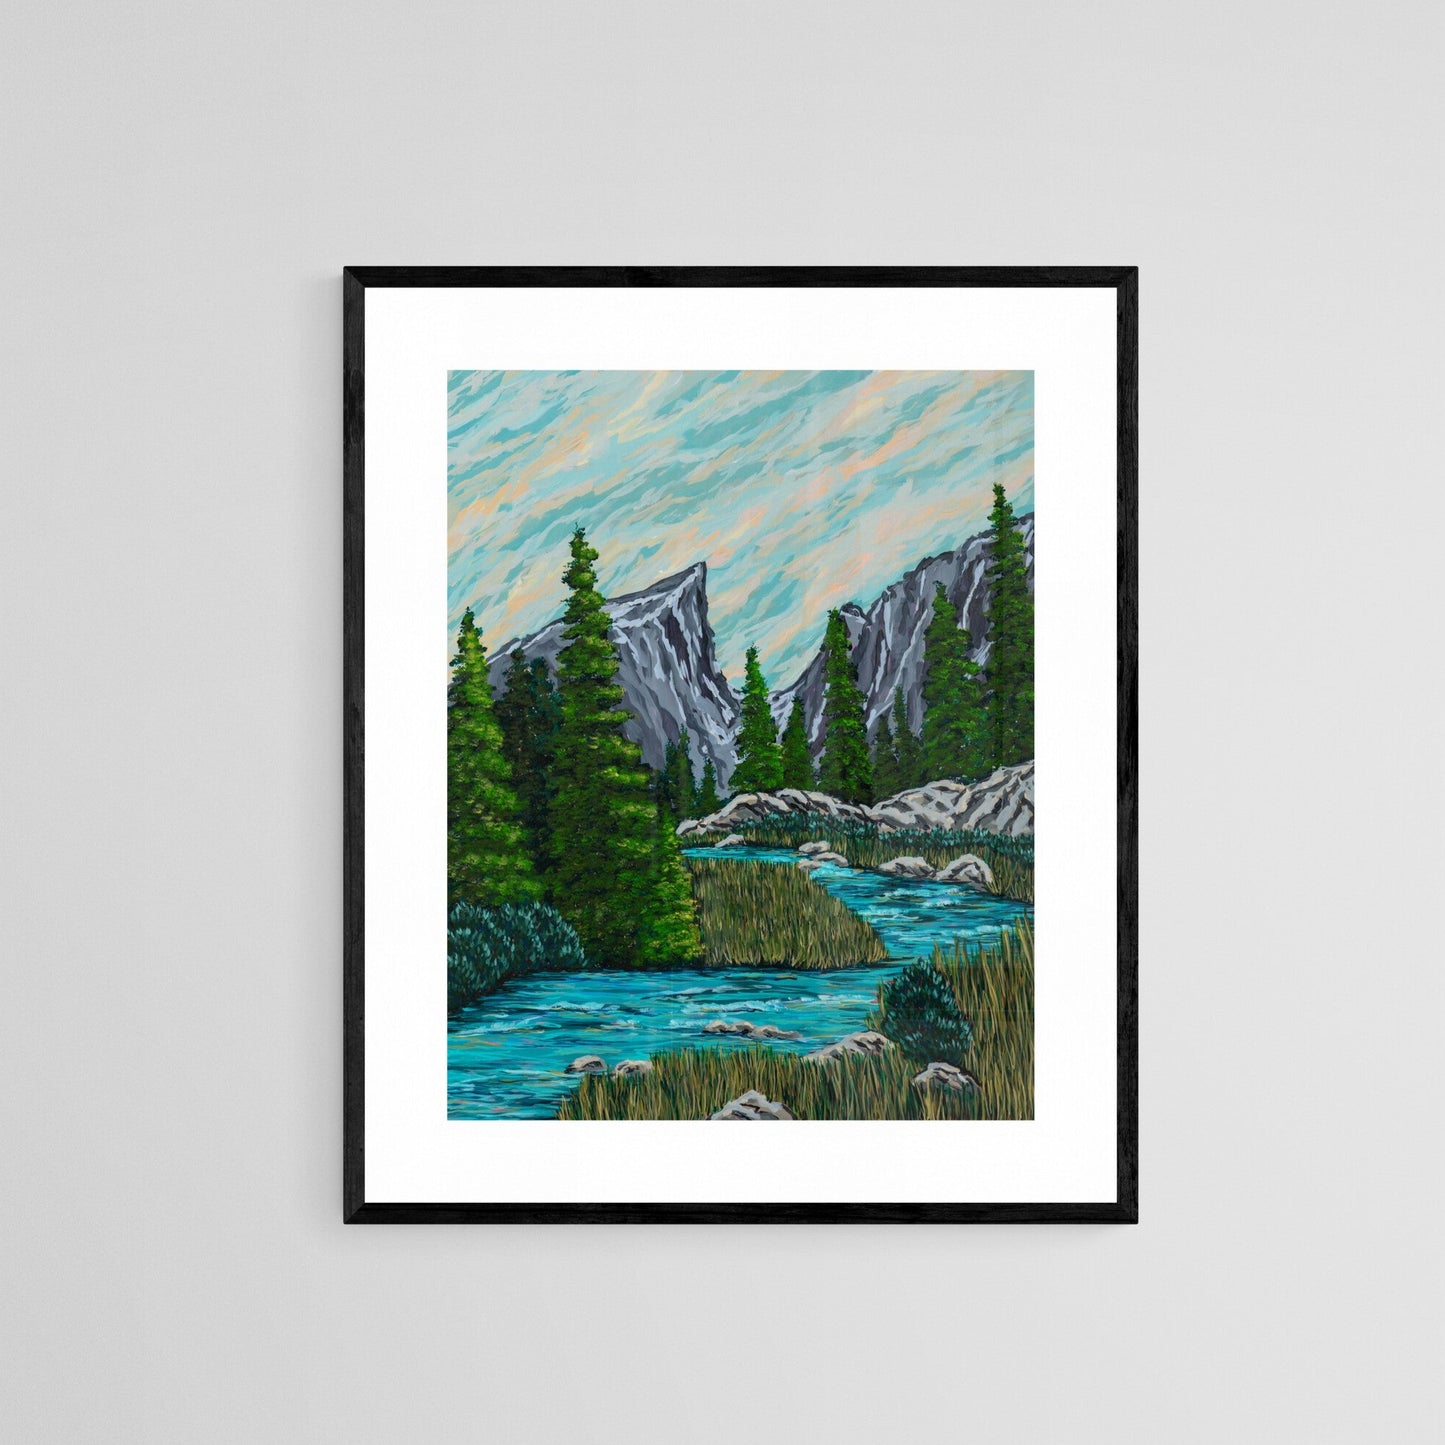 Rocky Mountains Art Print